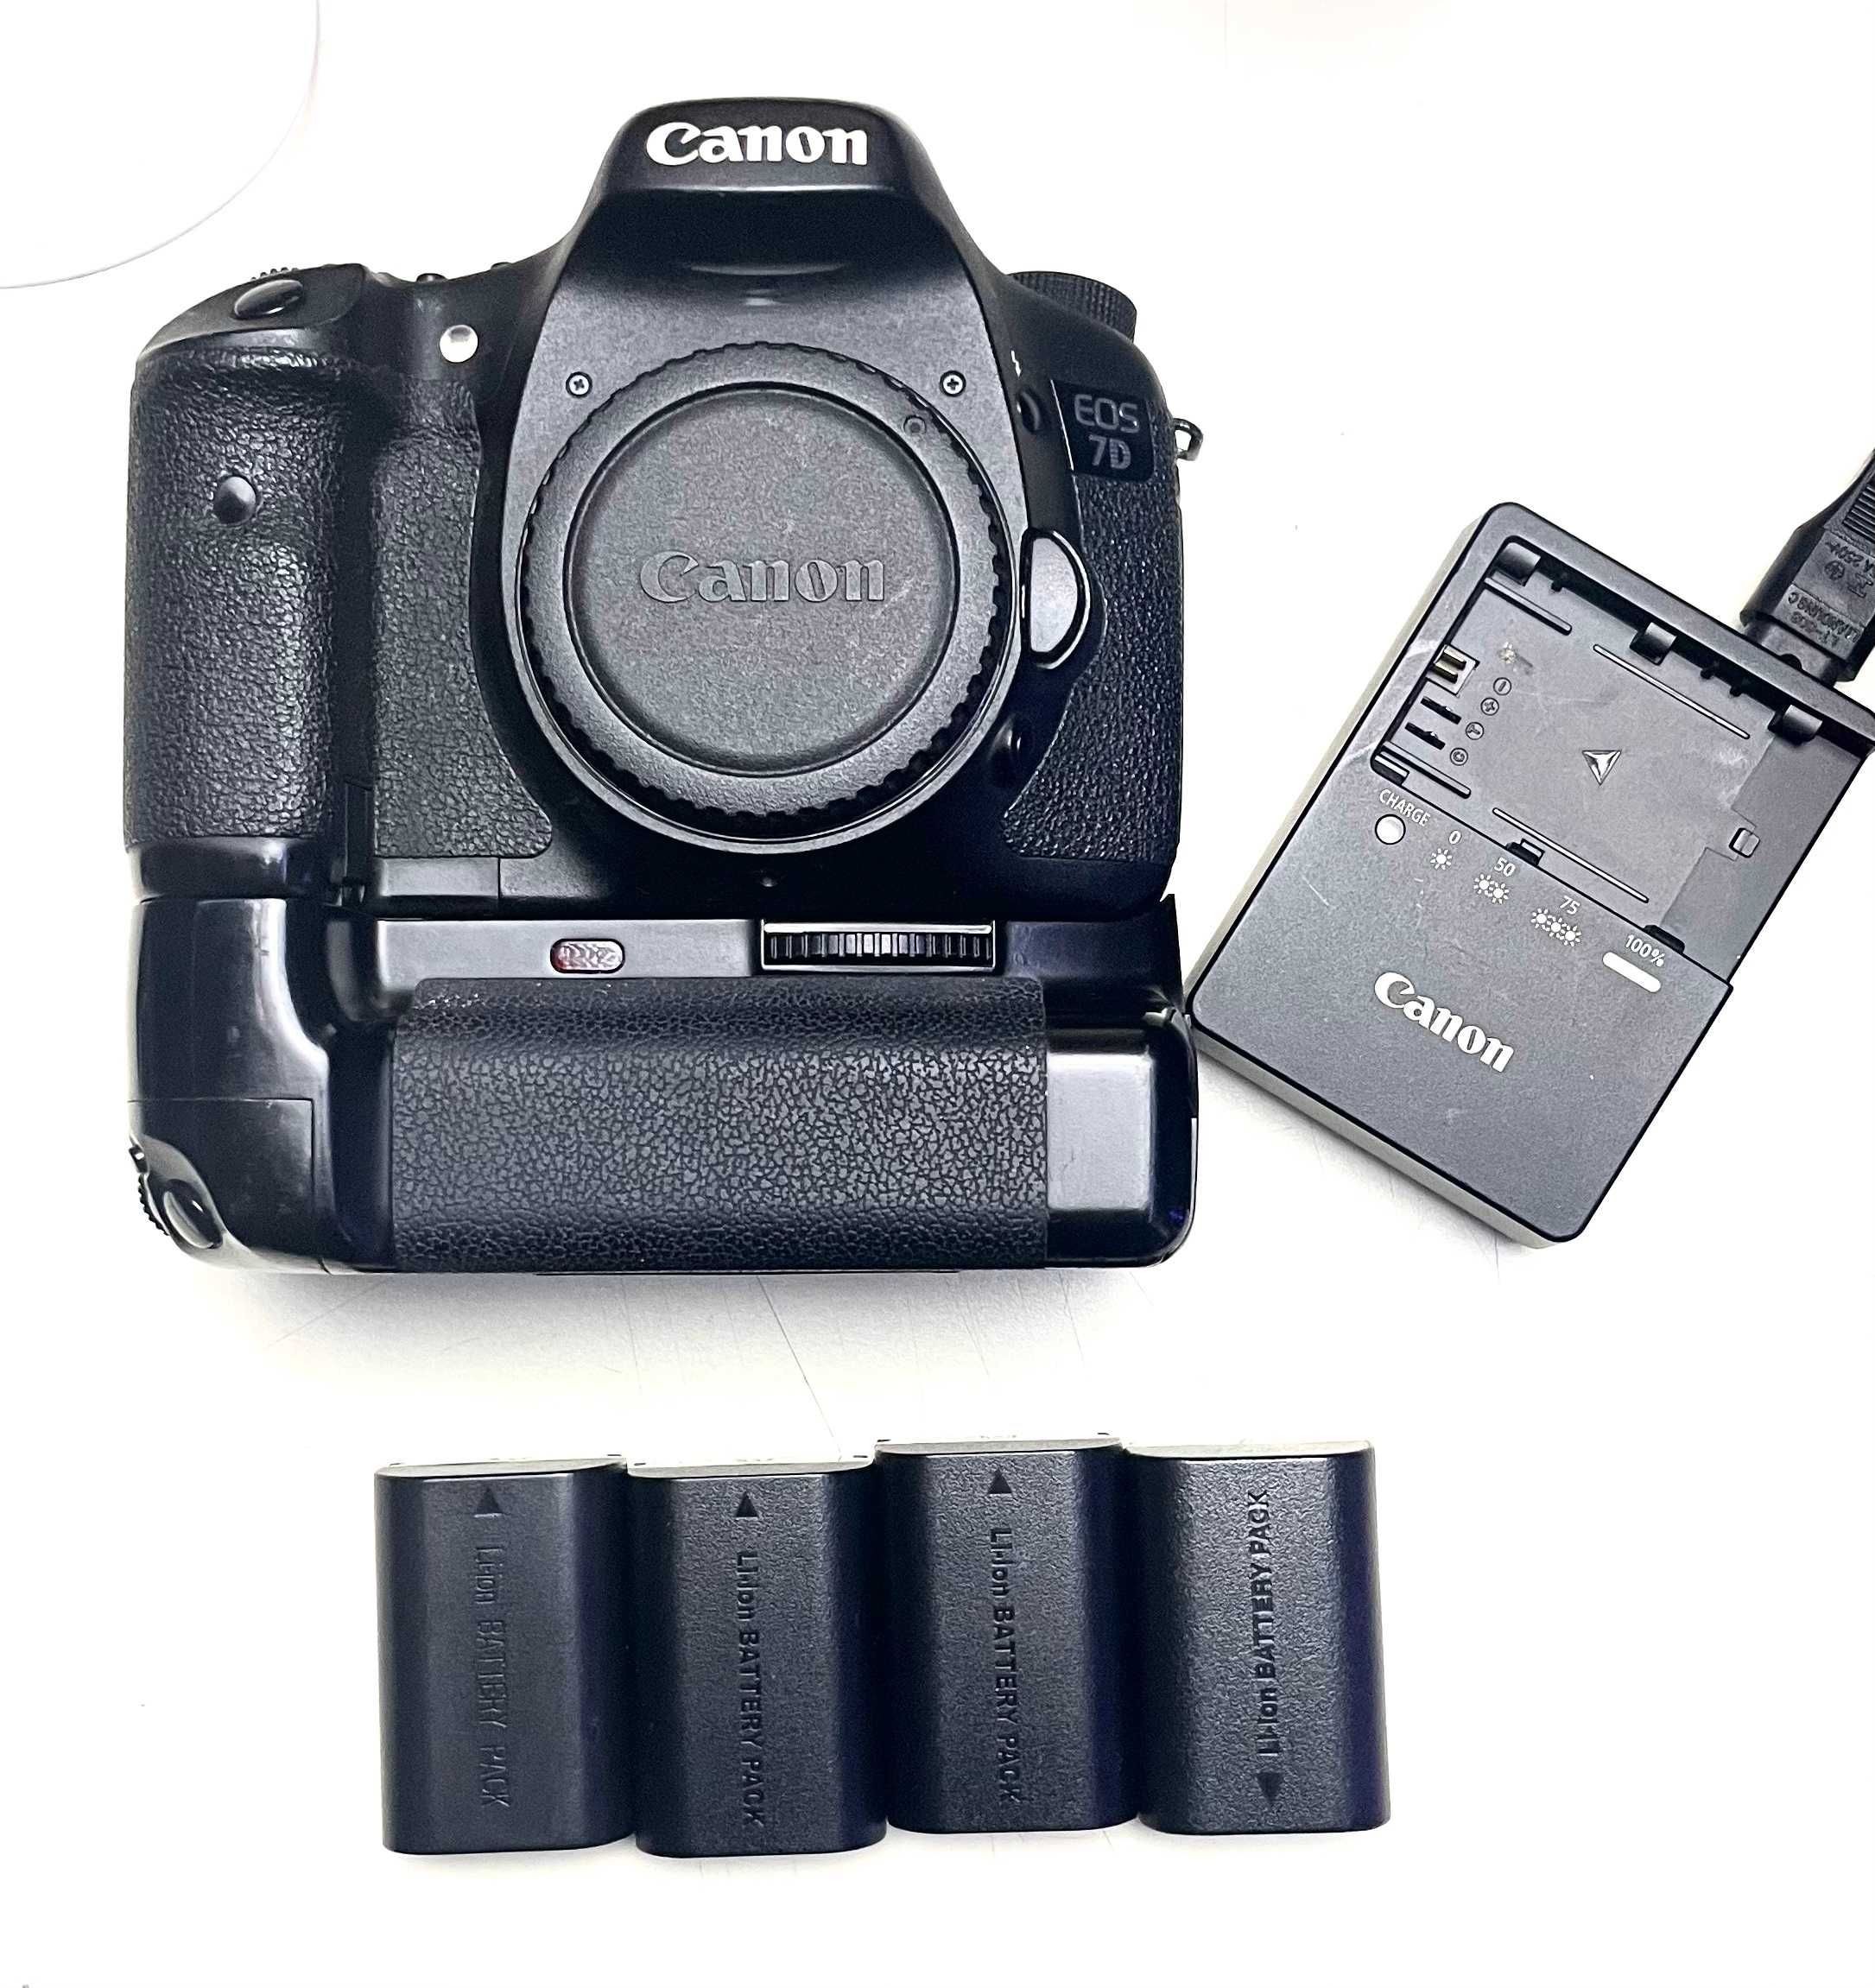 Maquina Fotográfica Canon Eos 7d, grip, carregador, 4 baterias